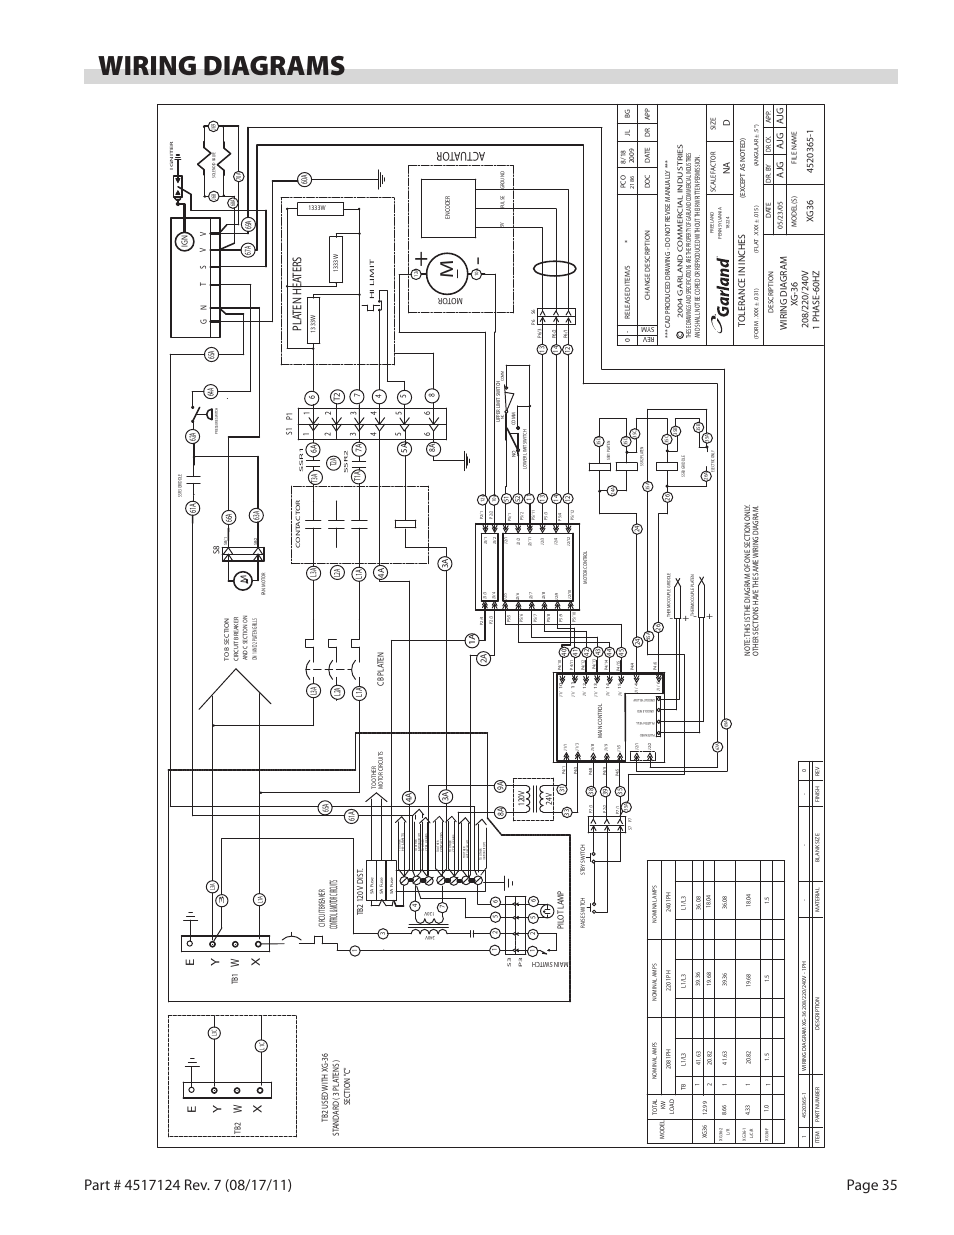 garland mwe2w wiring diagram